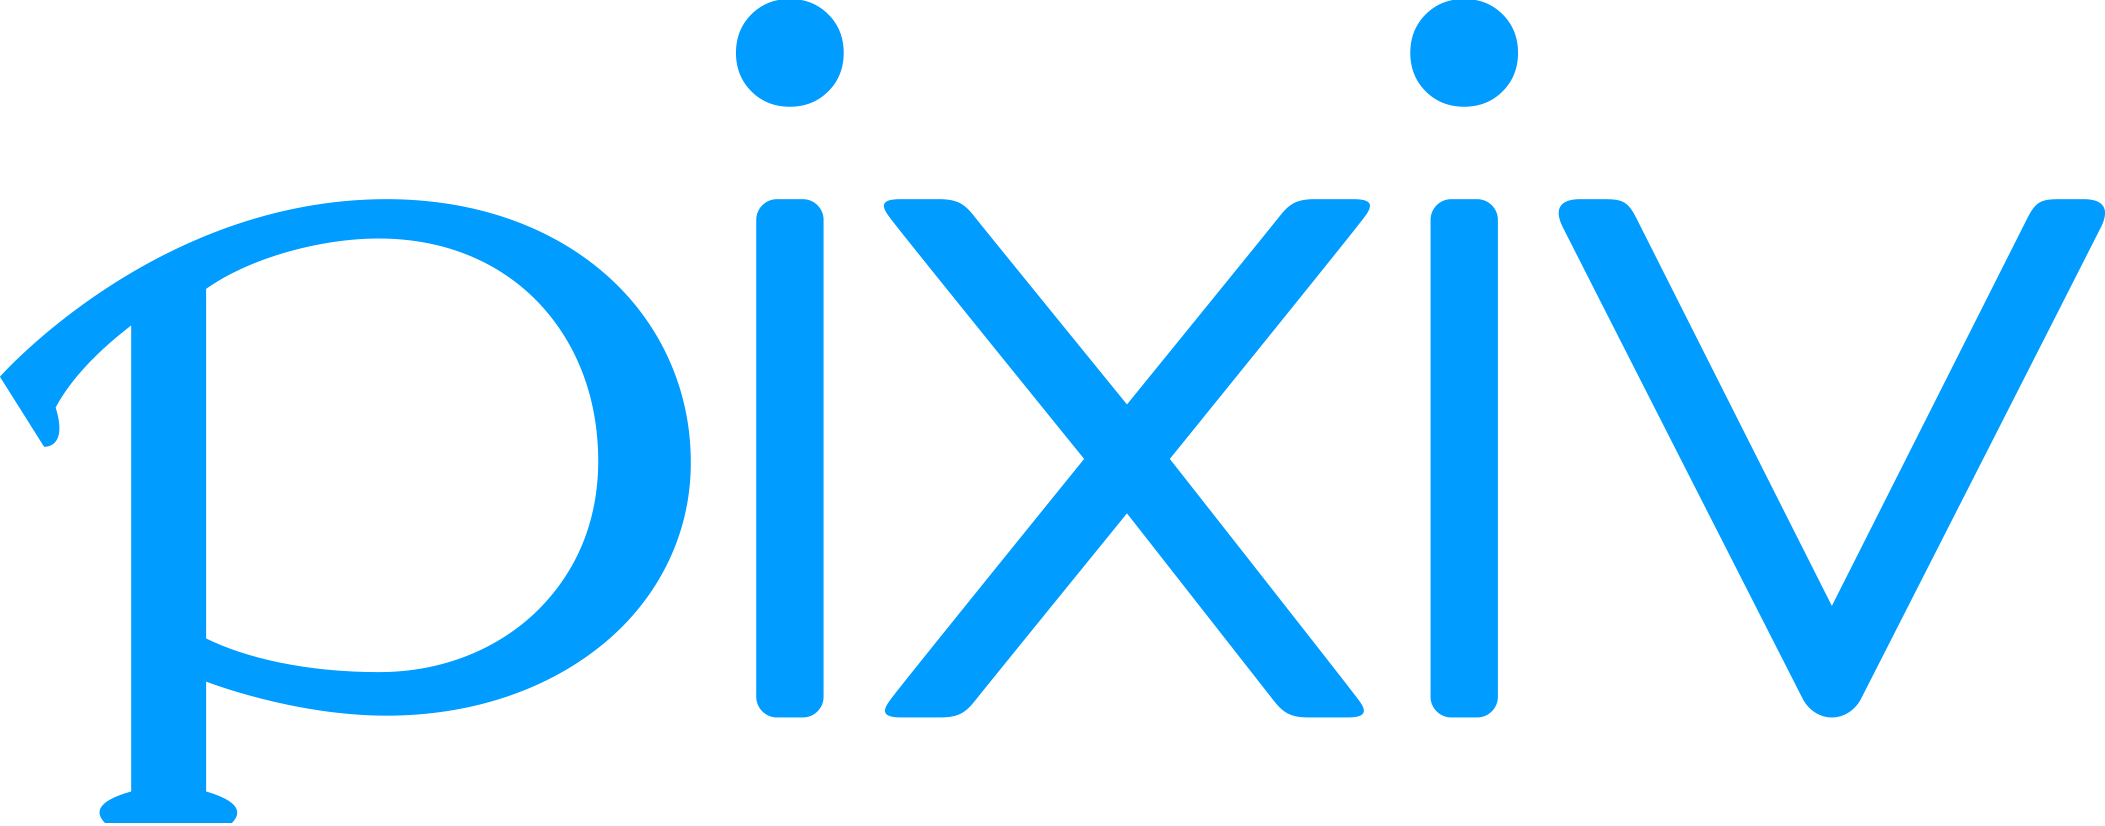 Pixiv logo.png